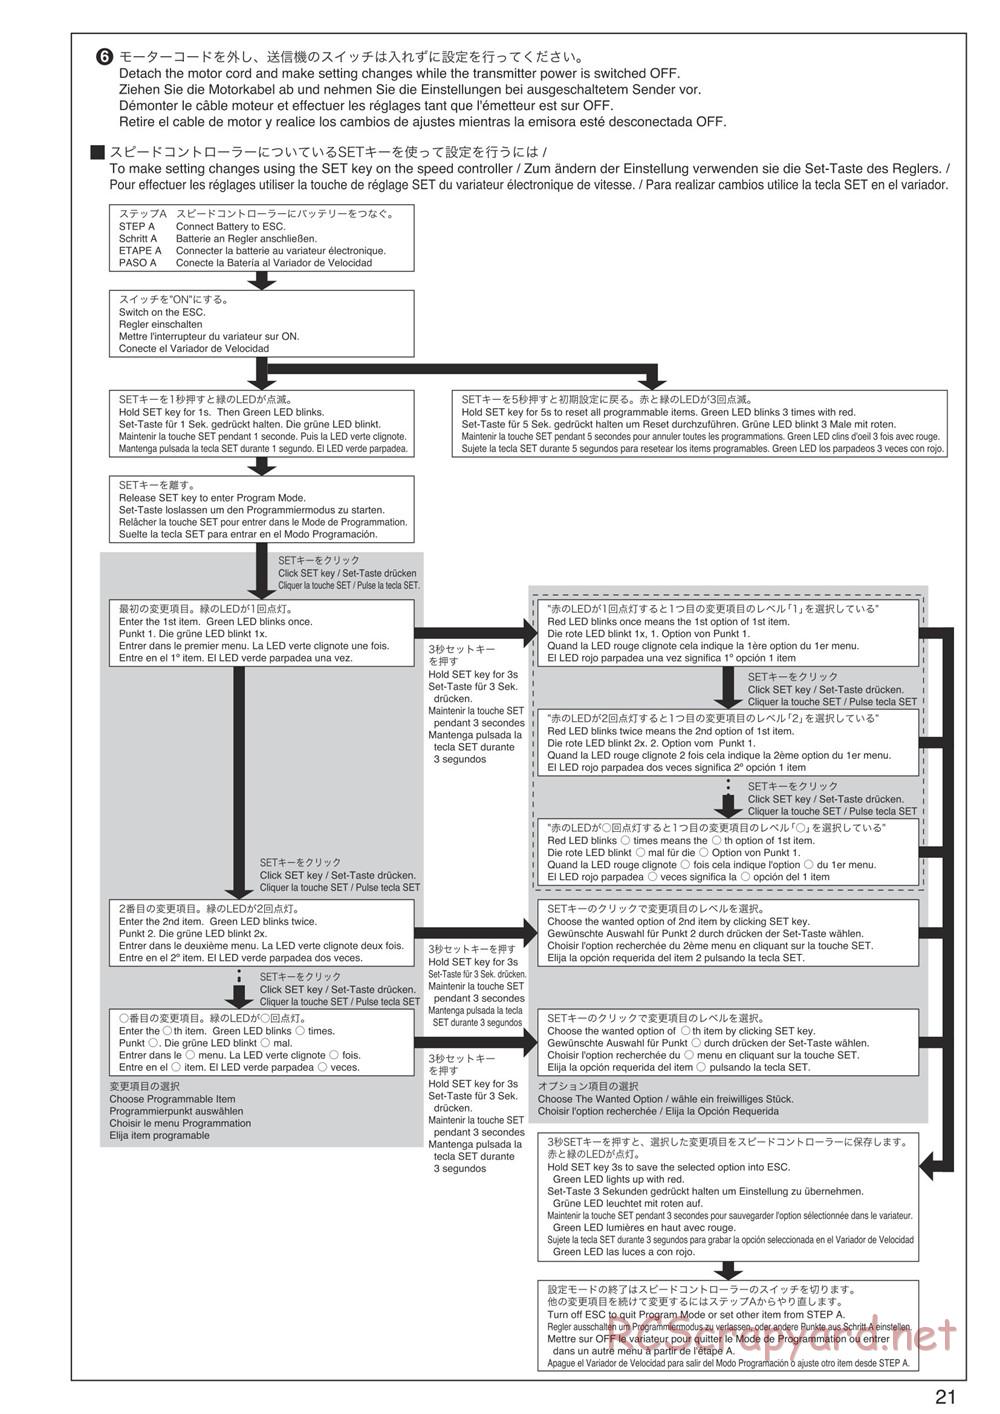 Kyosho - DMT VE-R - Manual - Page 21